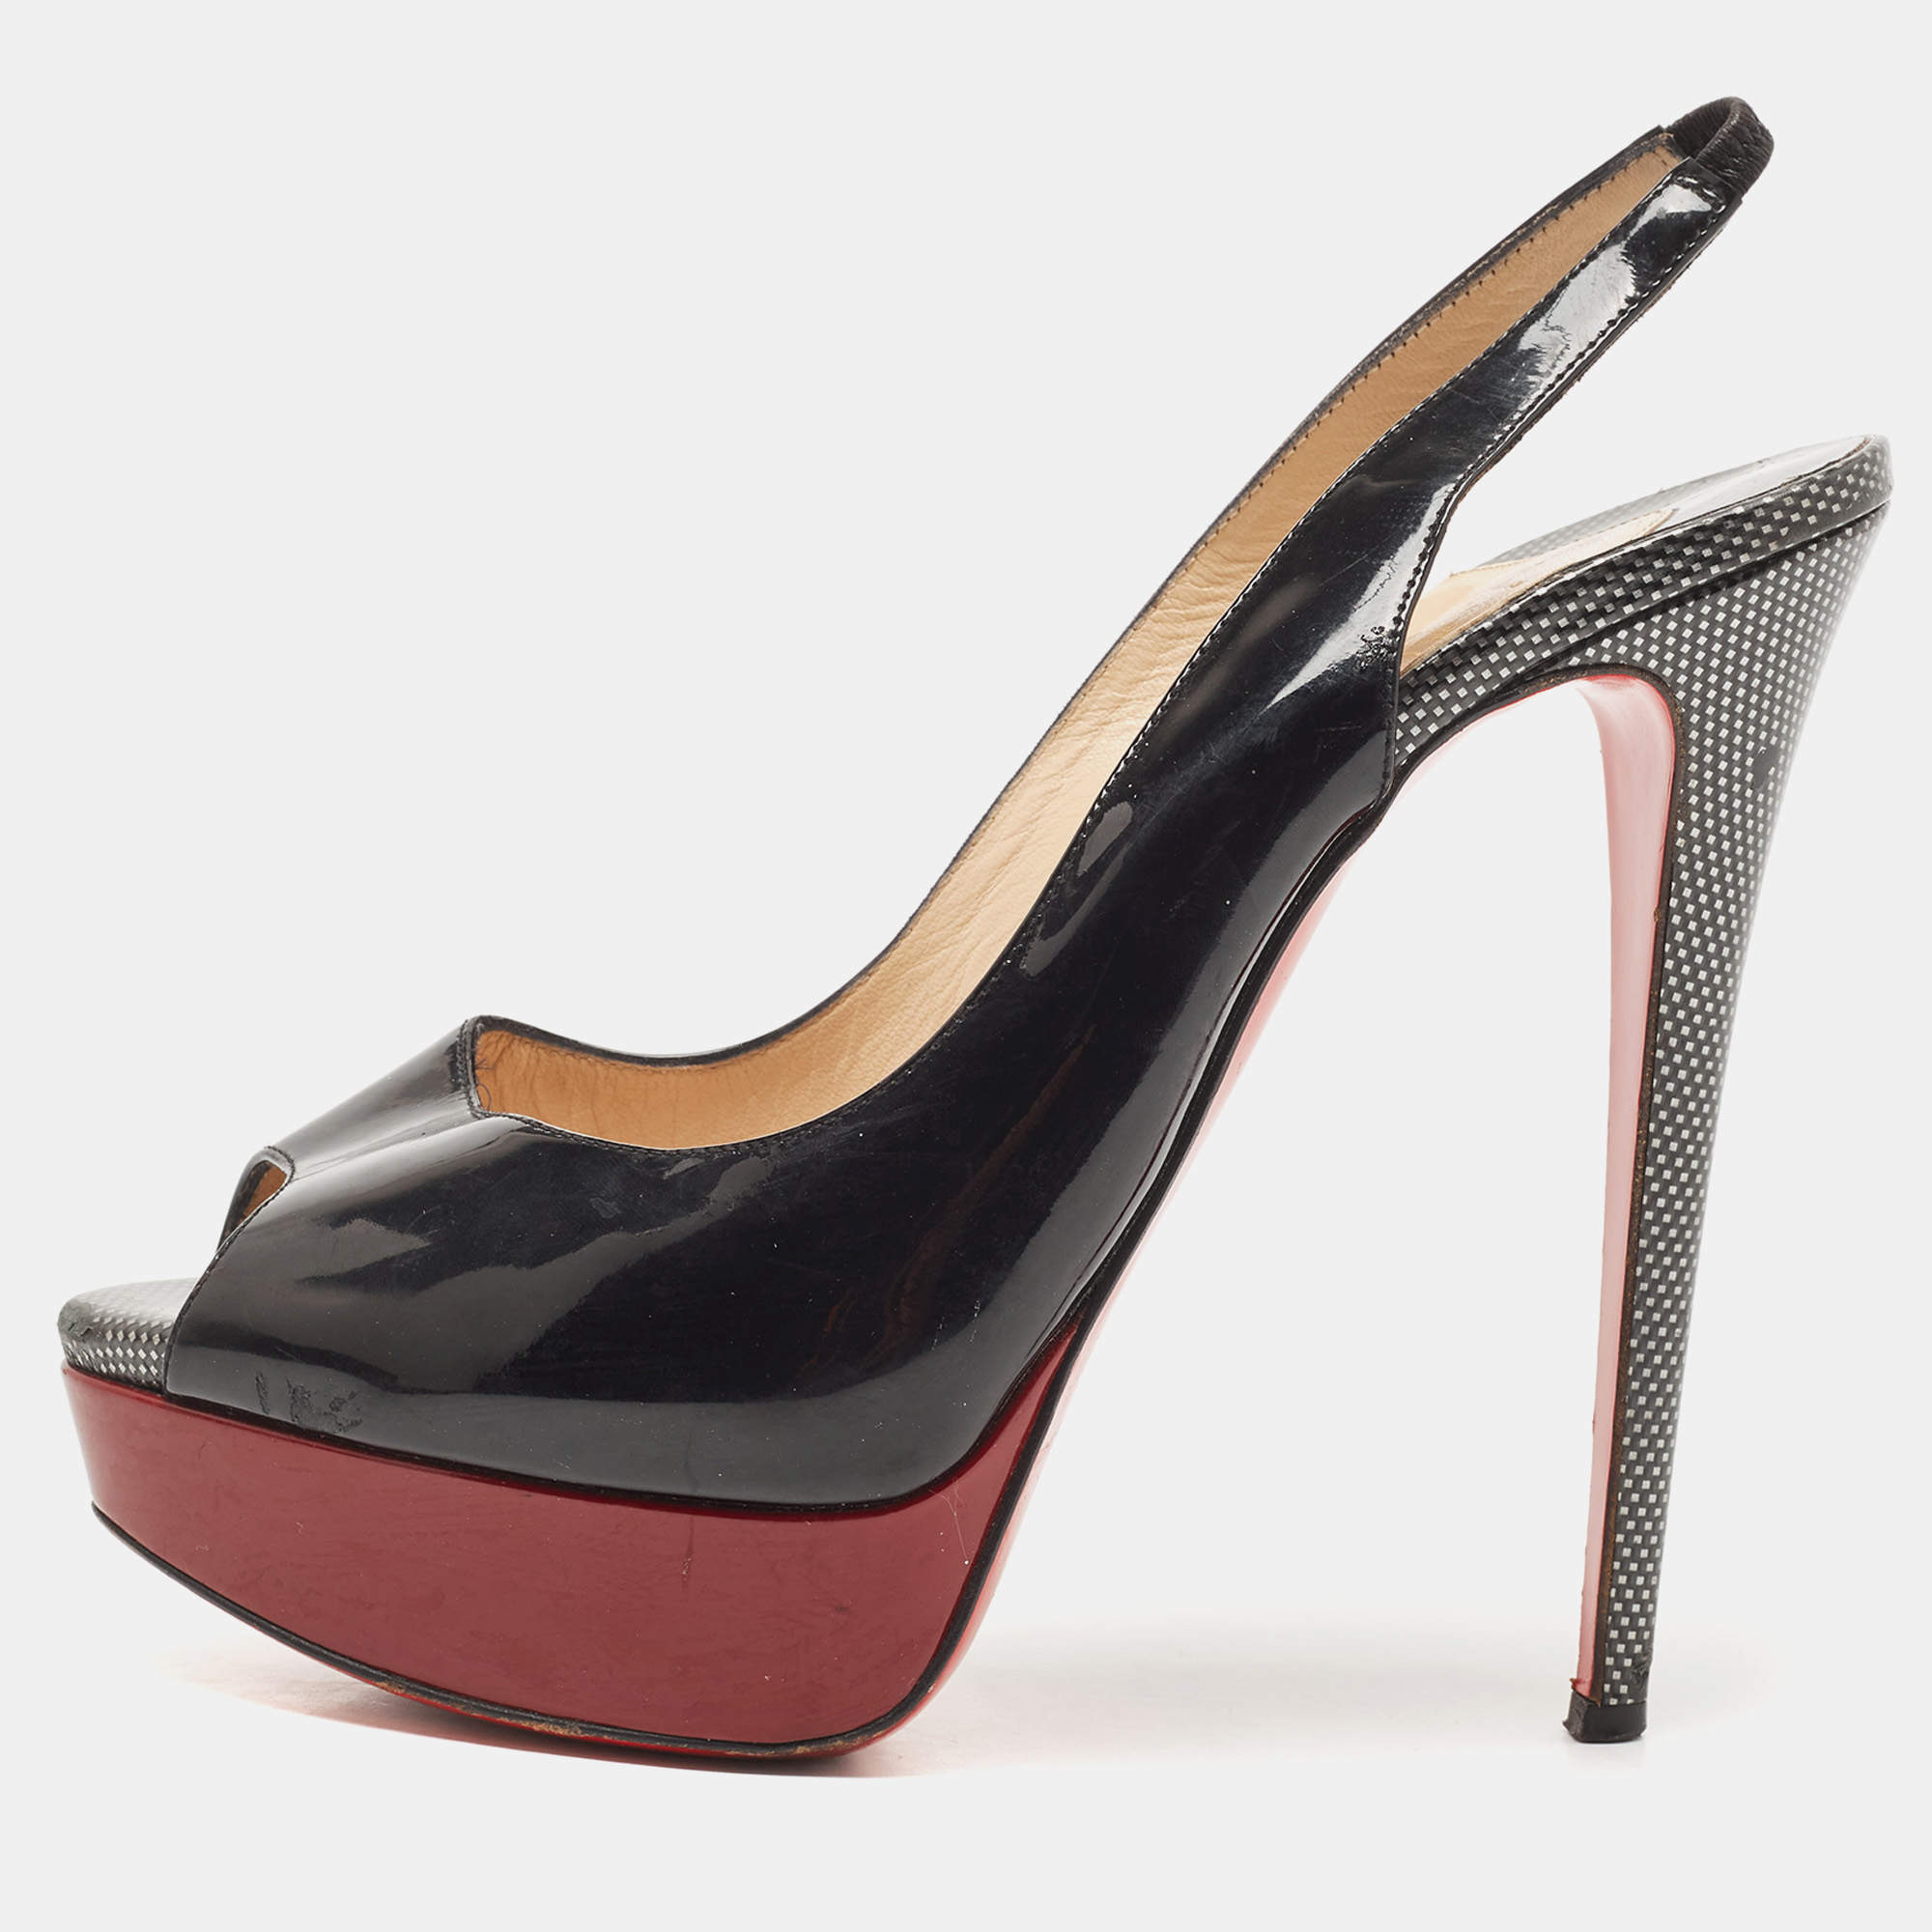 Christian Louboutin Lady Peep Toe Black Patent High Heels 39.5